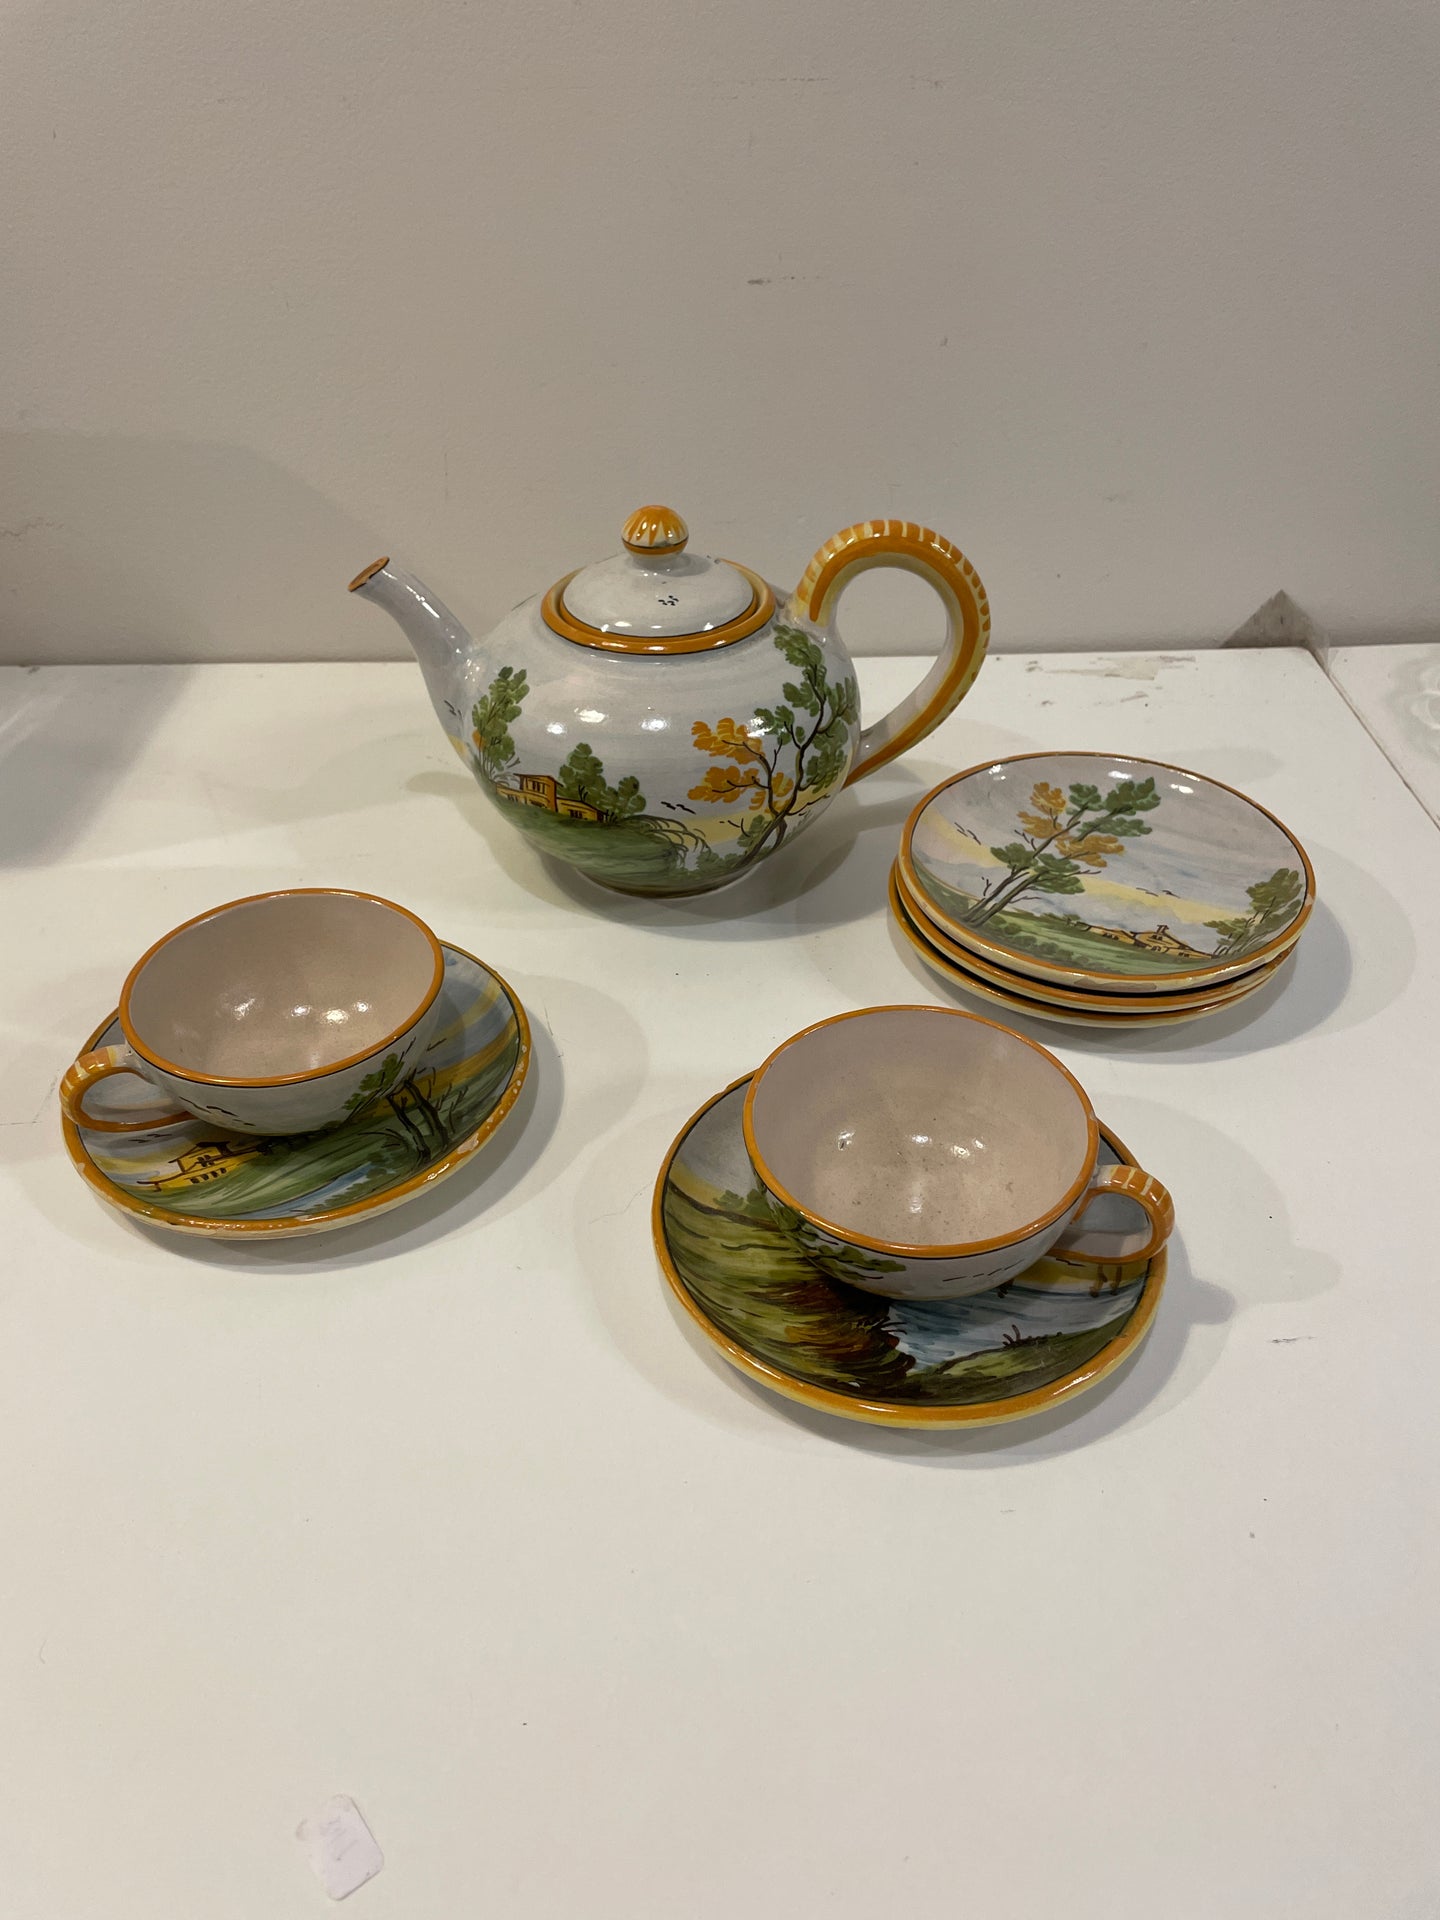 Incomplete Tea Set, Italian Countryside Scene,  Includes Teapot, 2 Cups, 5 Saucers